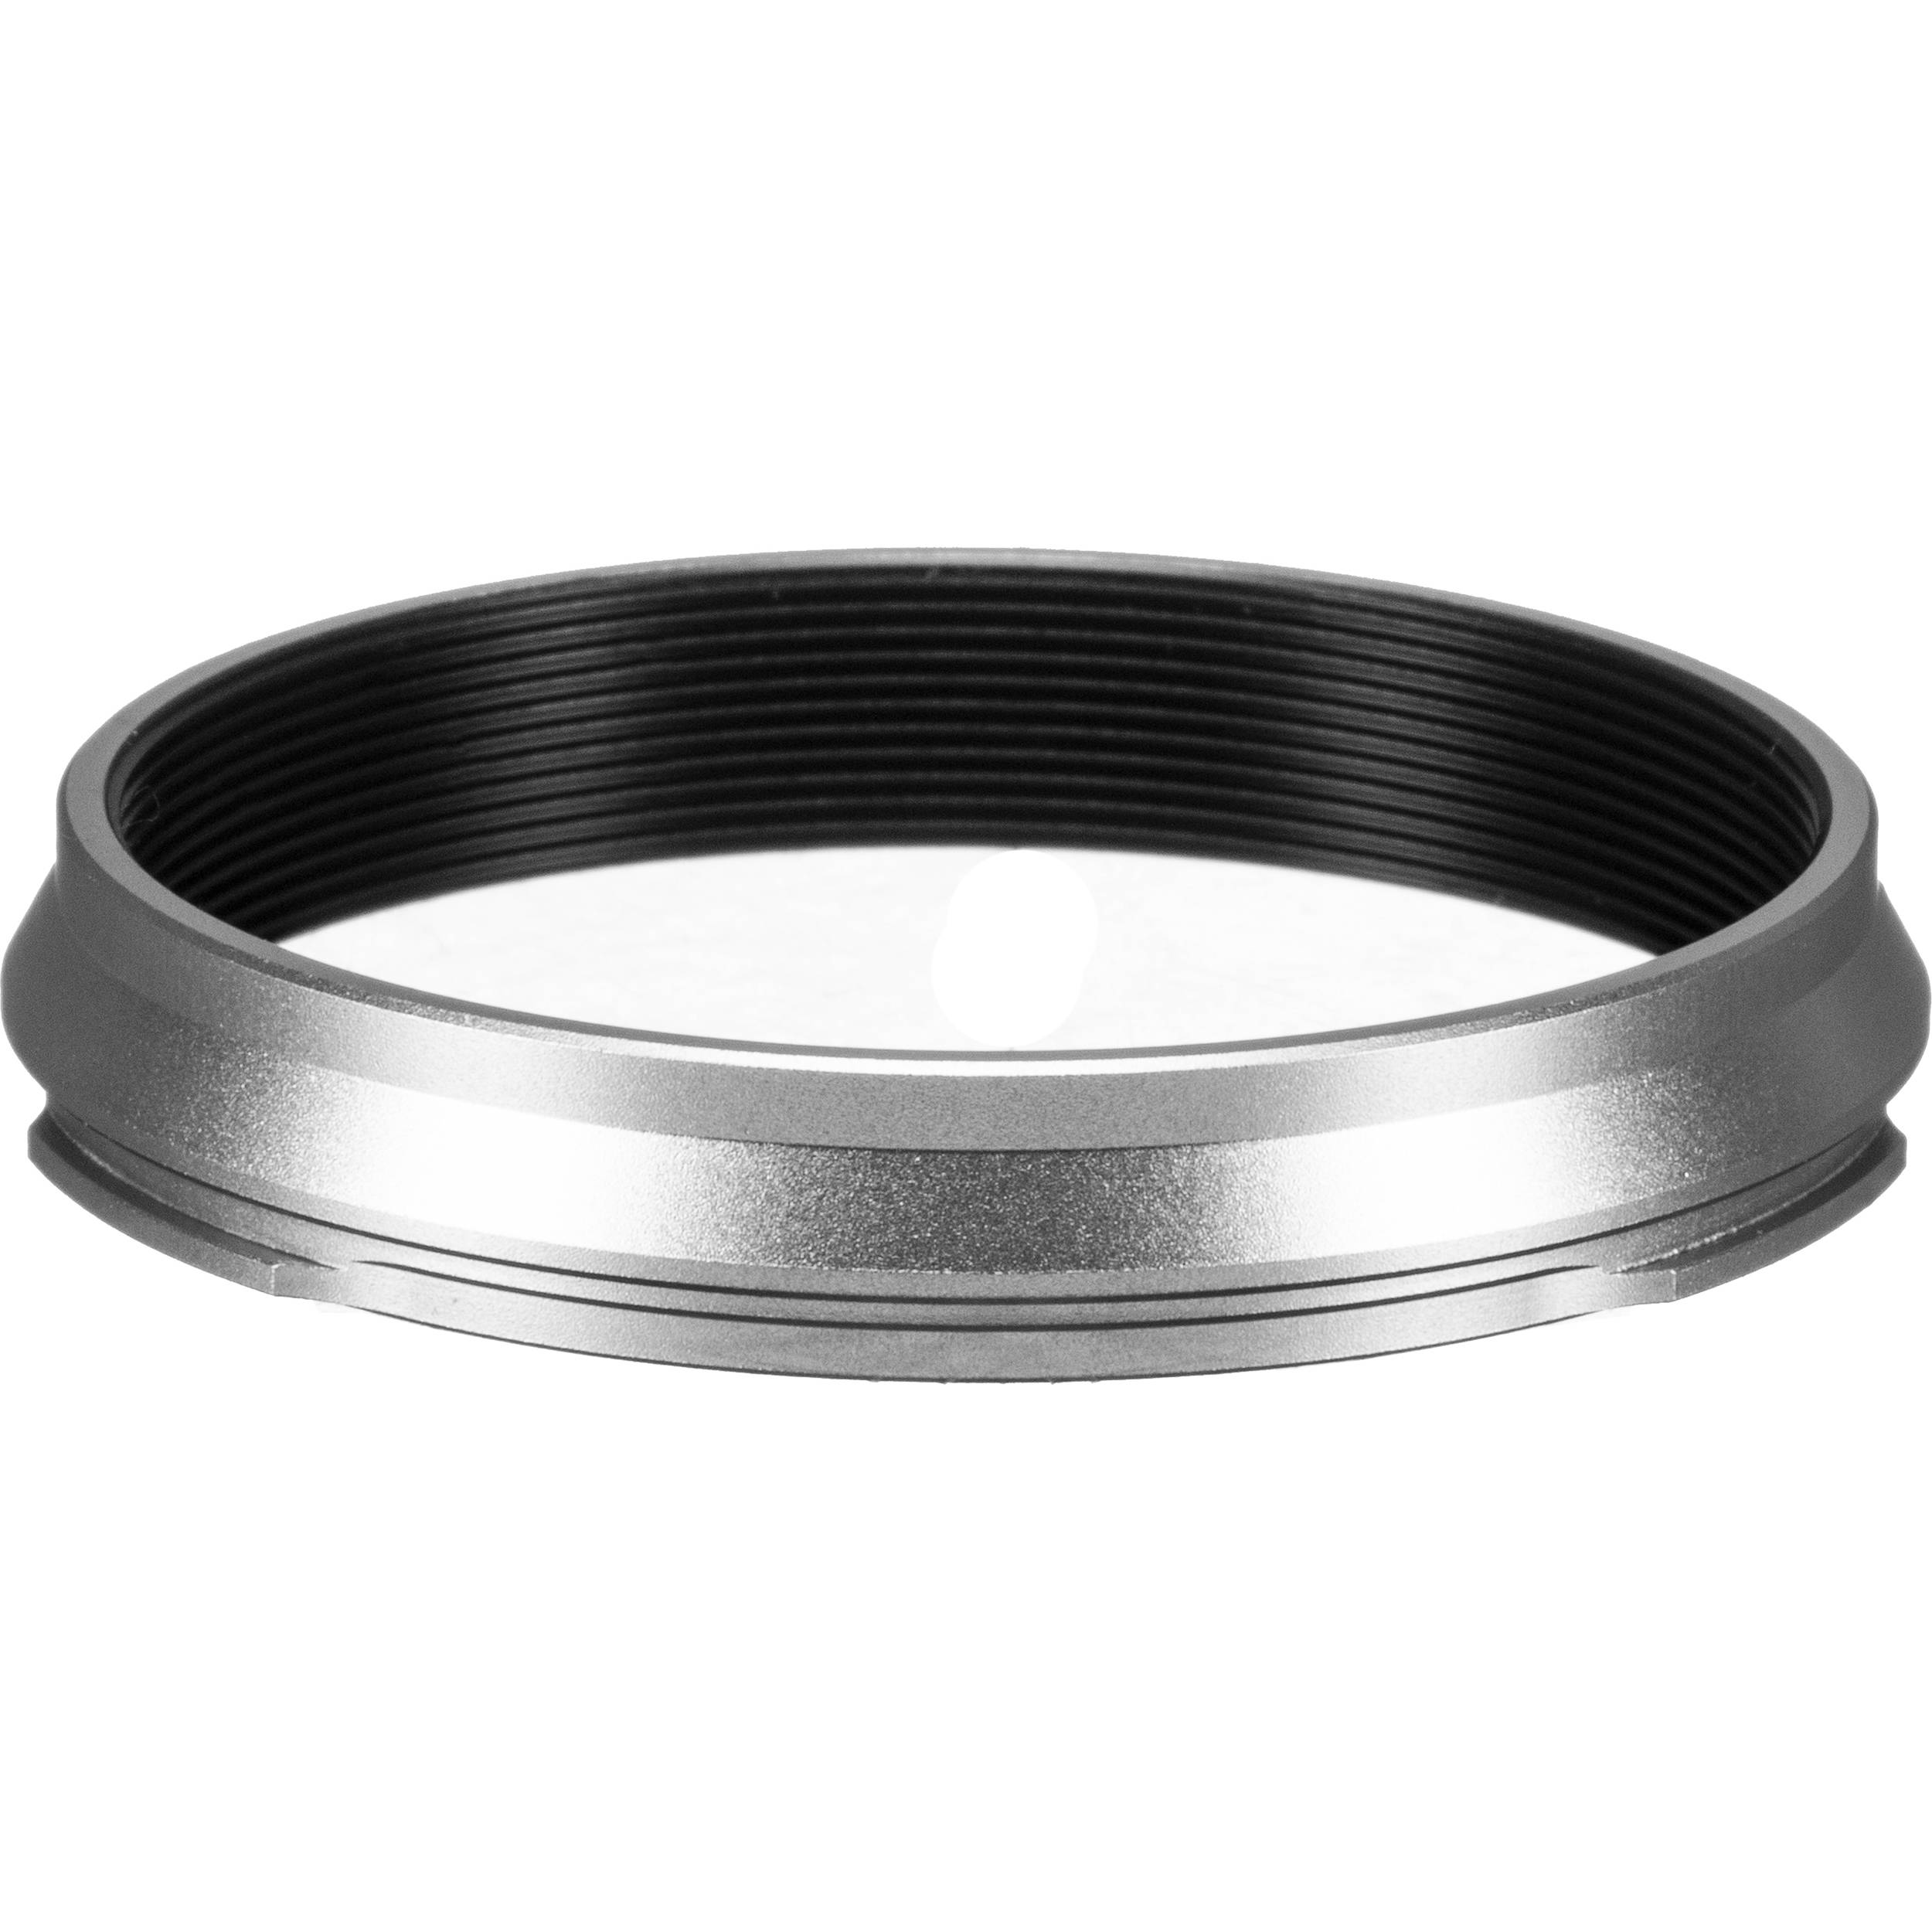 Fujifilm X100 Lens Hood + Adapter Ring ARX100 - Silver